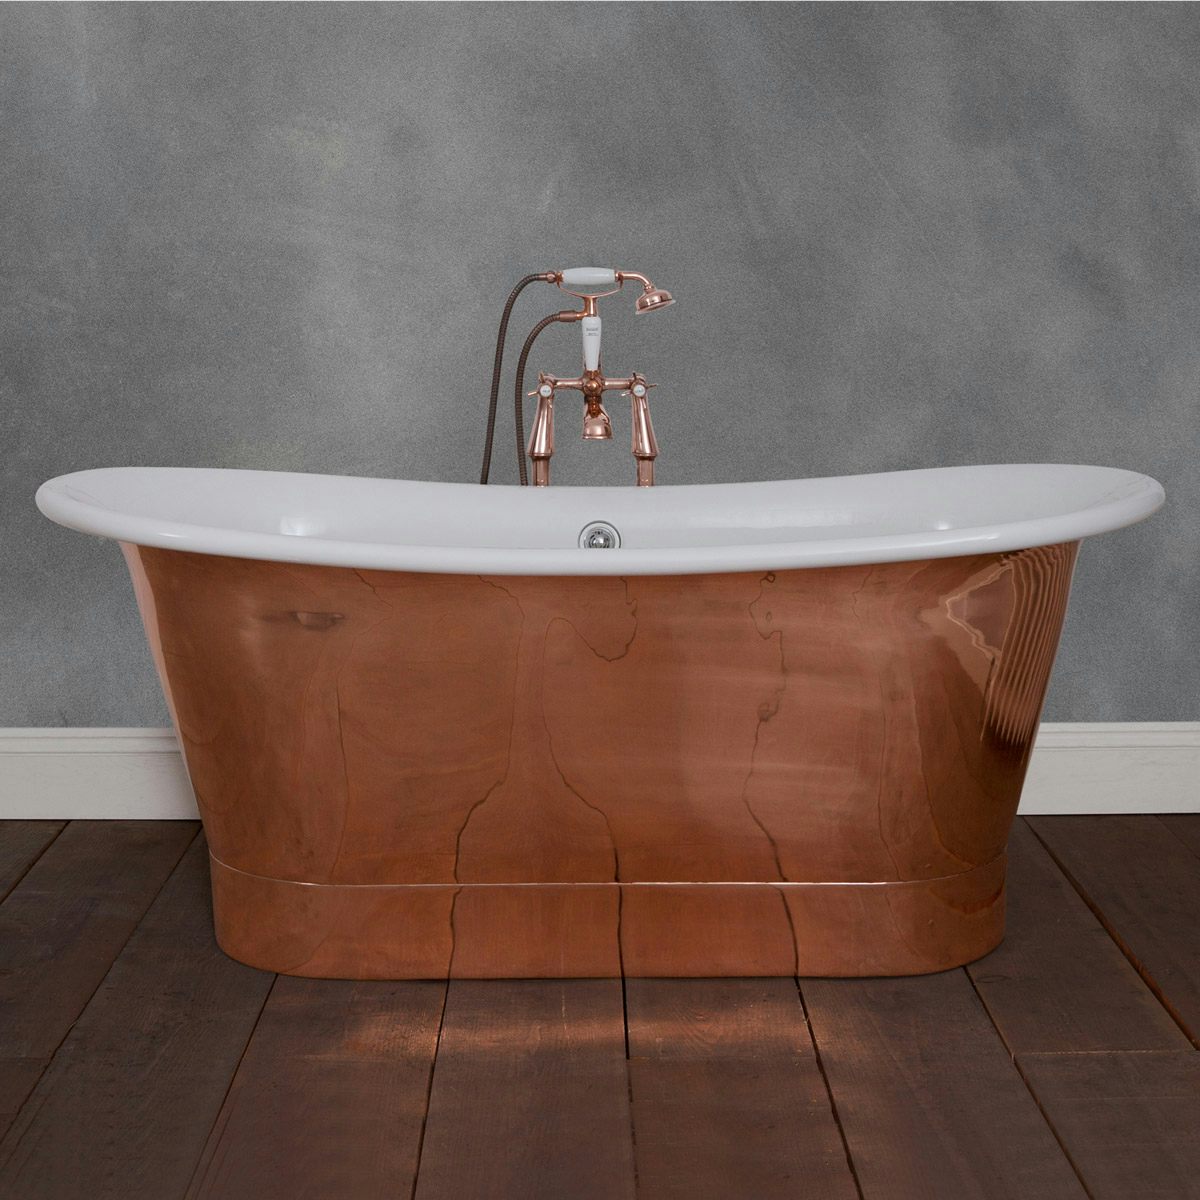 The Bath Co. Rembrandt copper and enamel bath